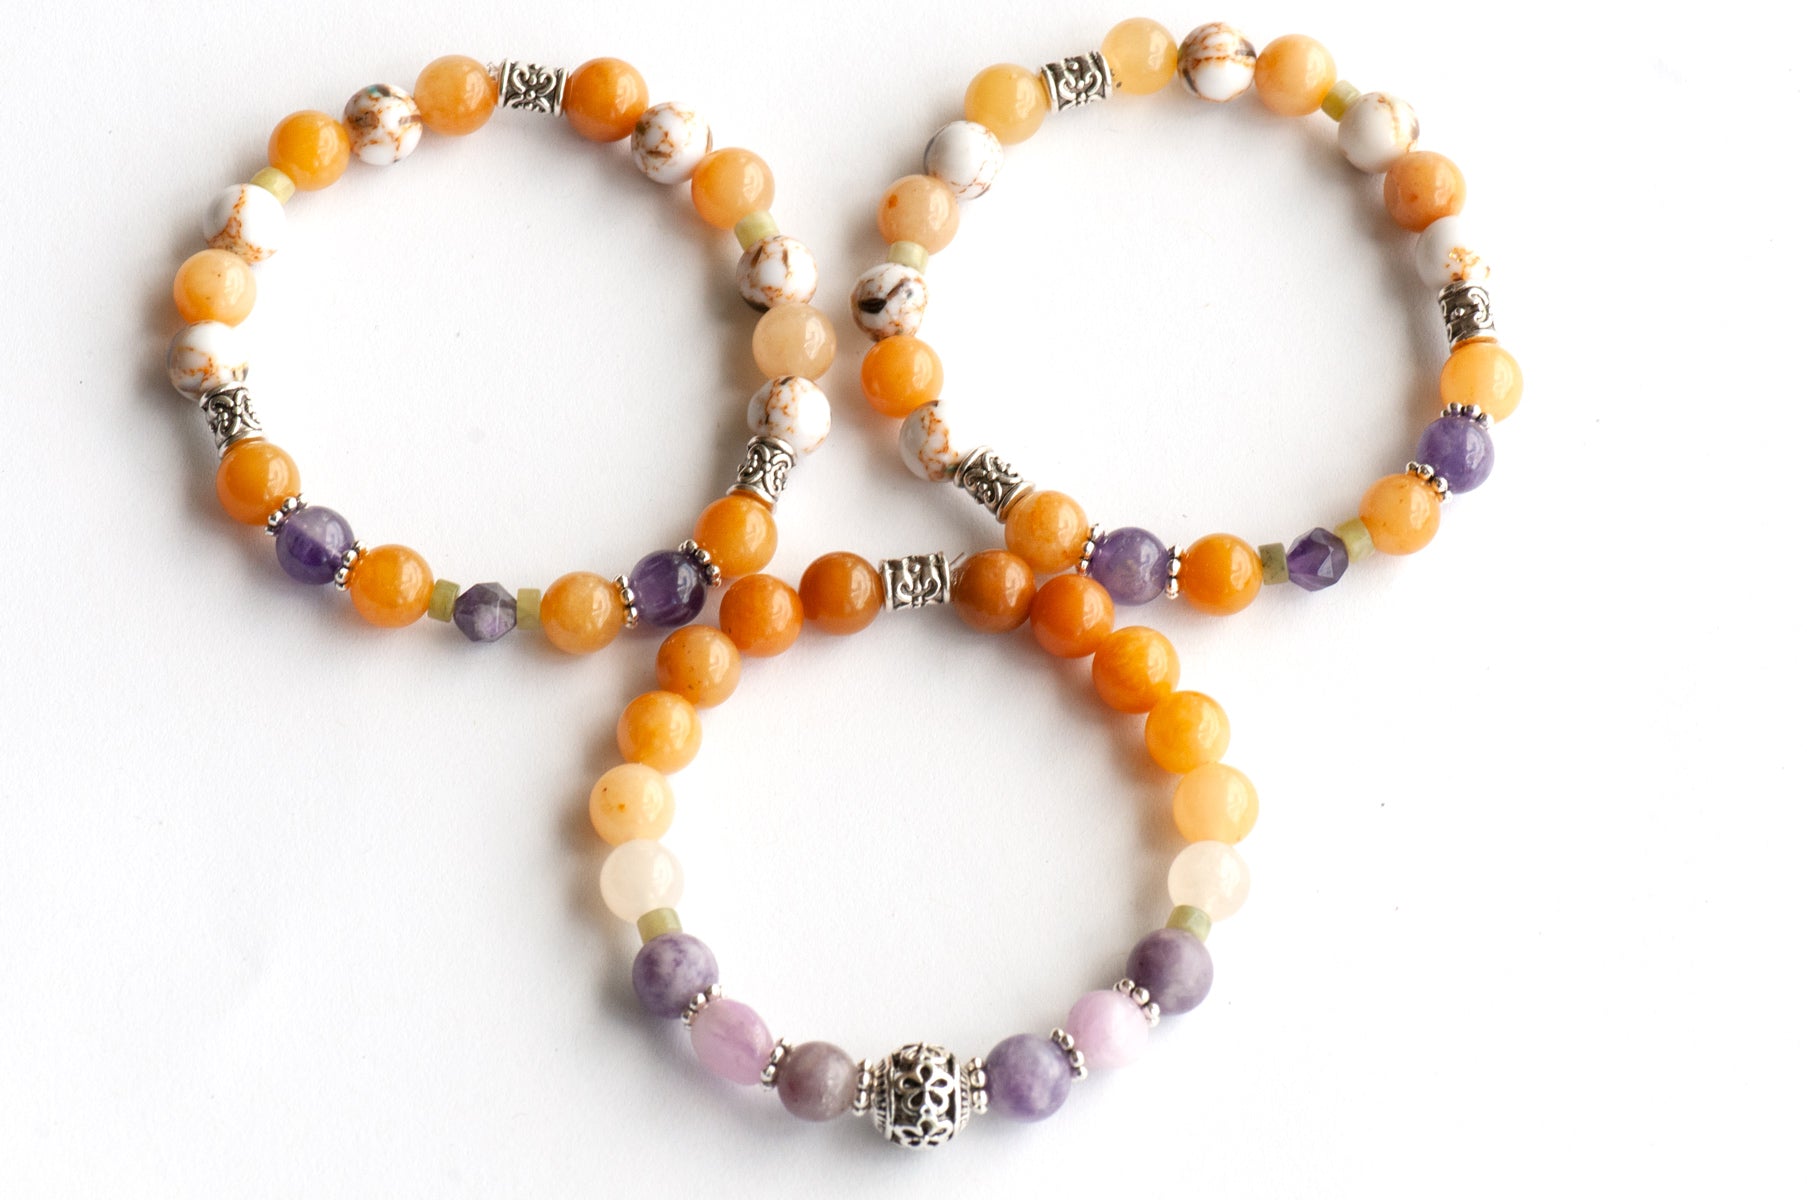 Lavender & Saffron gemstone bracelet handmade in New Brunswick Canada featuring Jade, Lepidolite, Kunzite and Amethyst